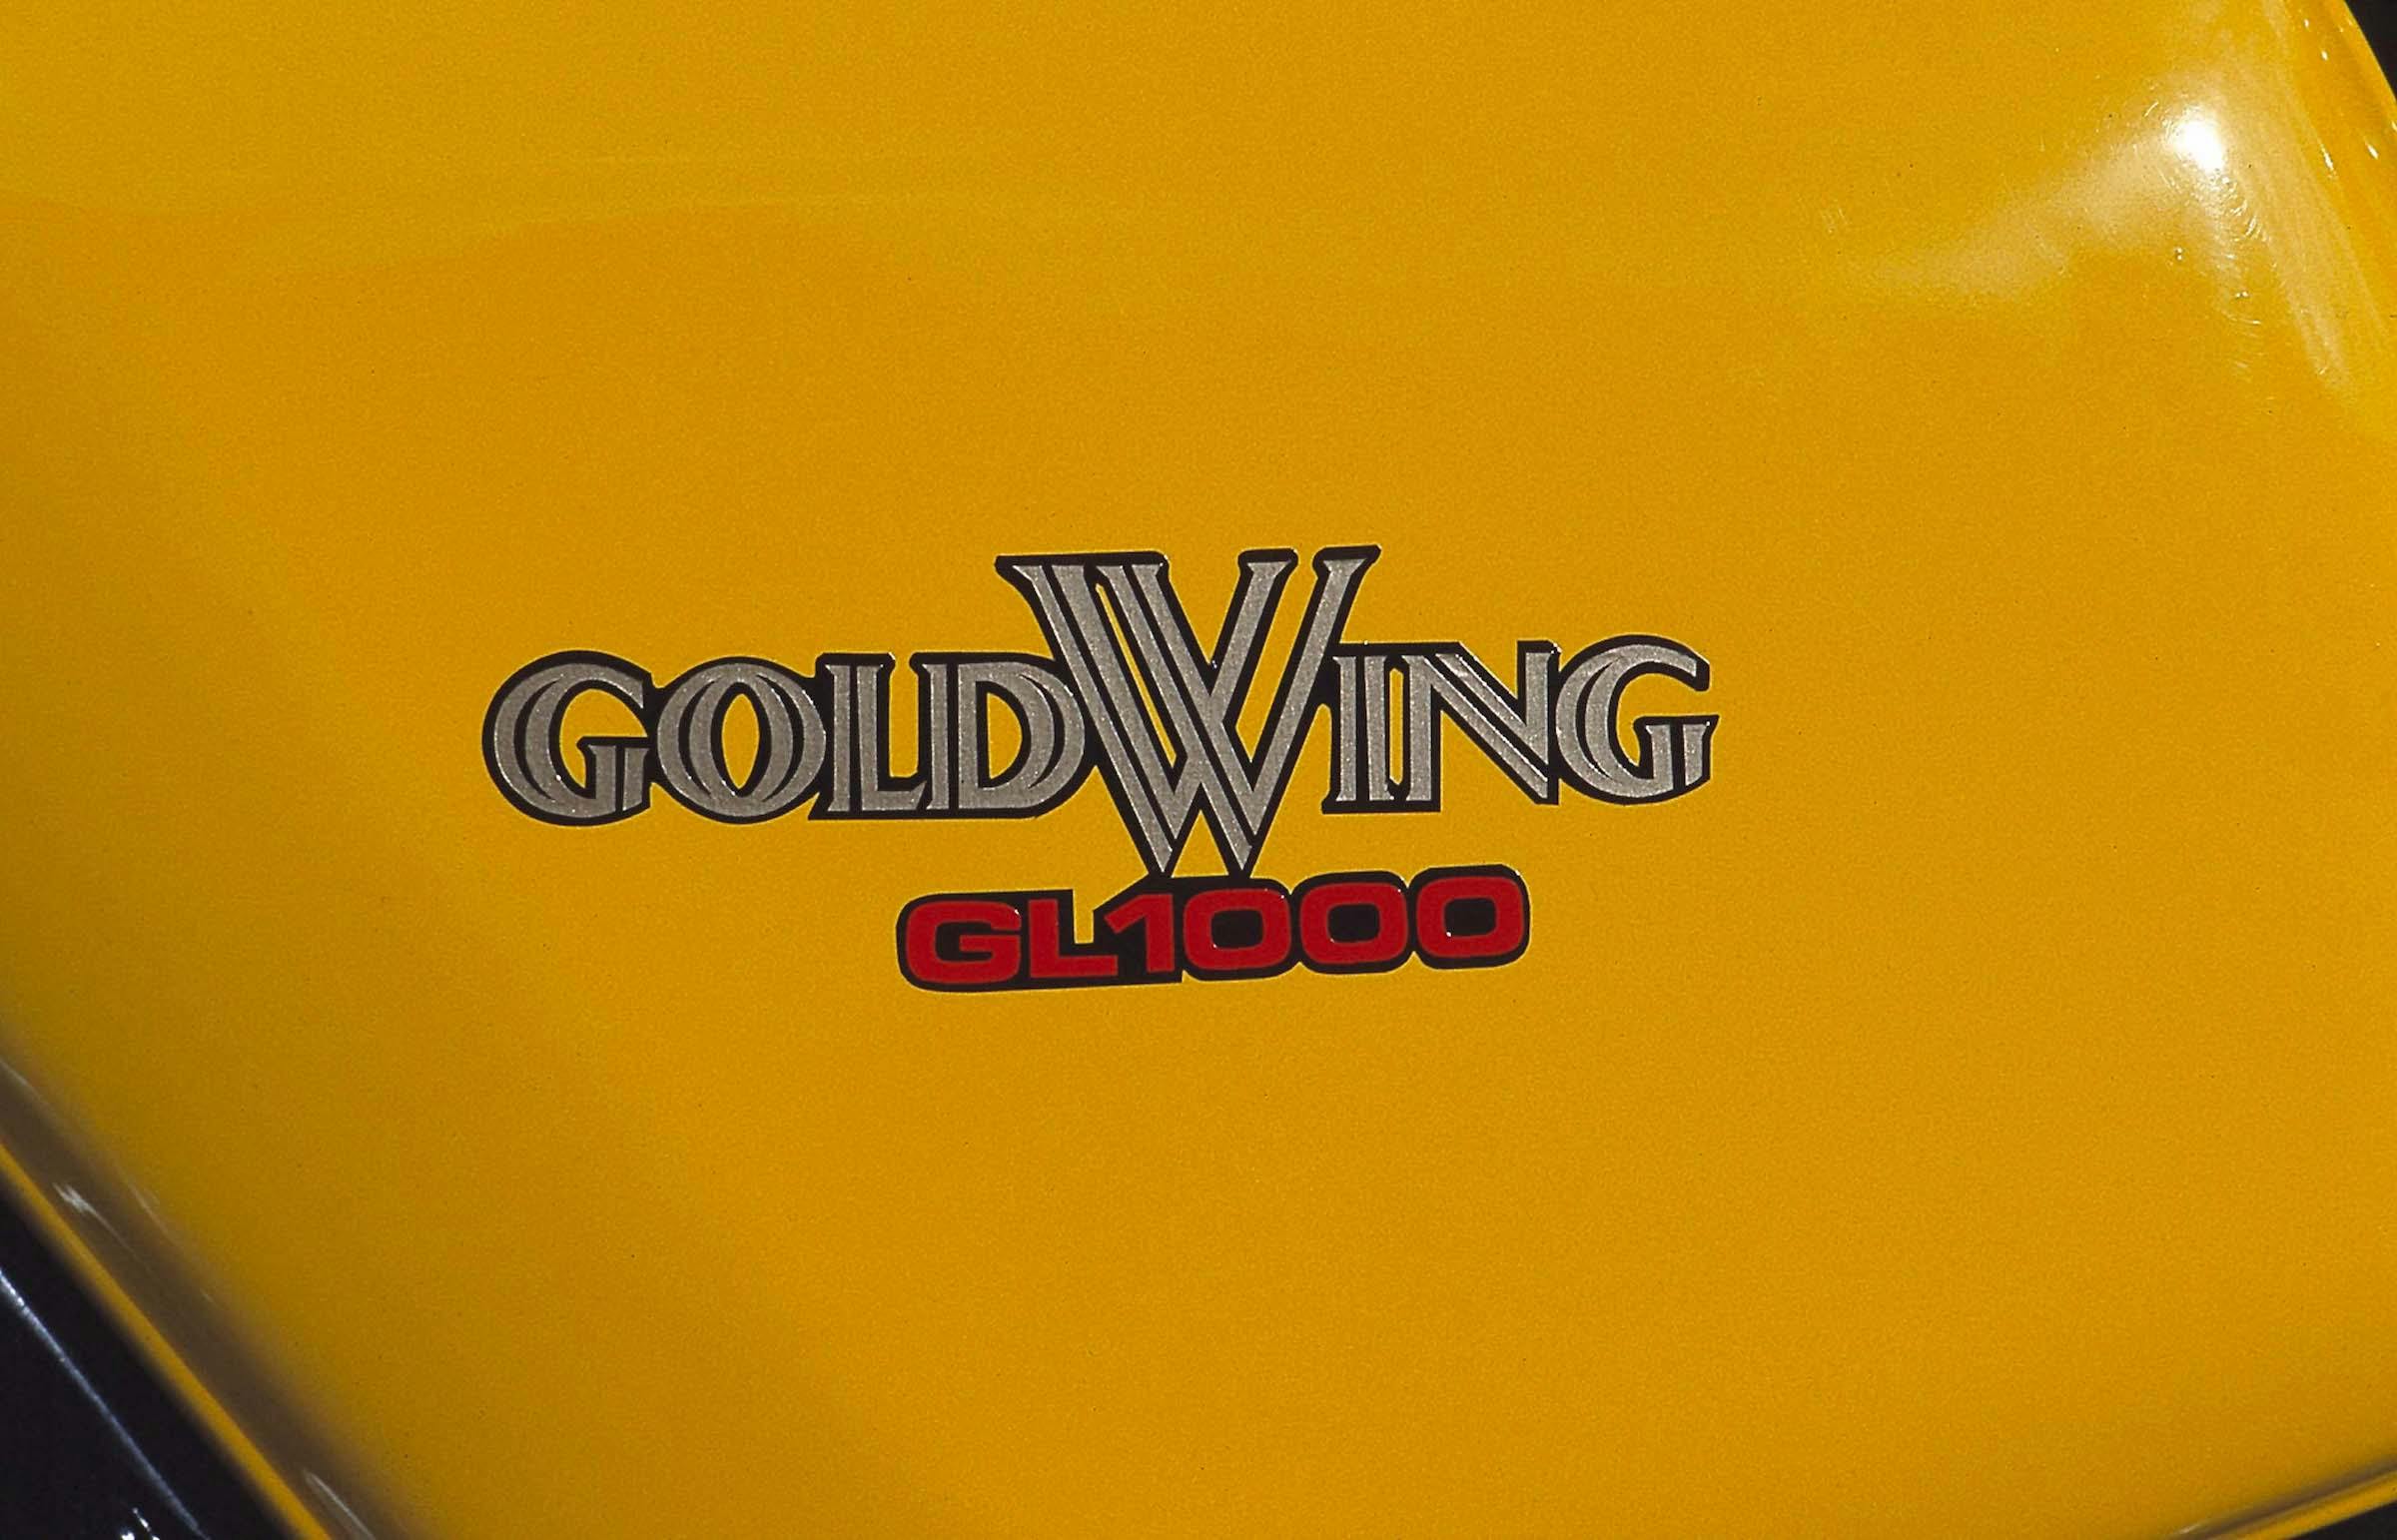 Honda Gold Wing tank lettering logo